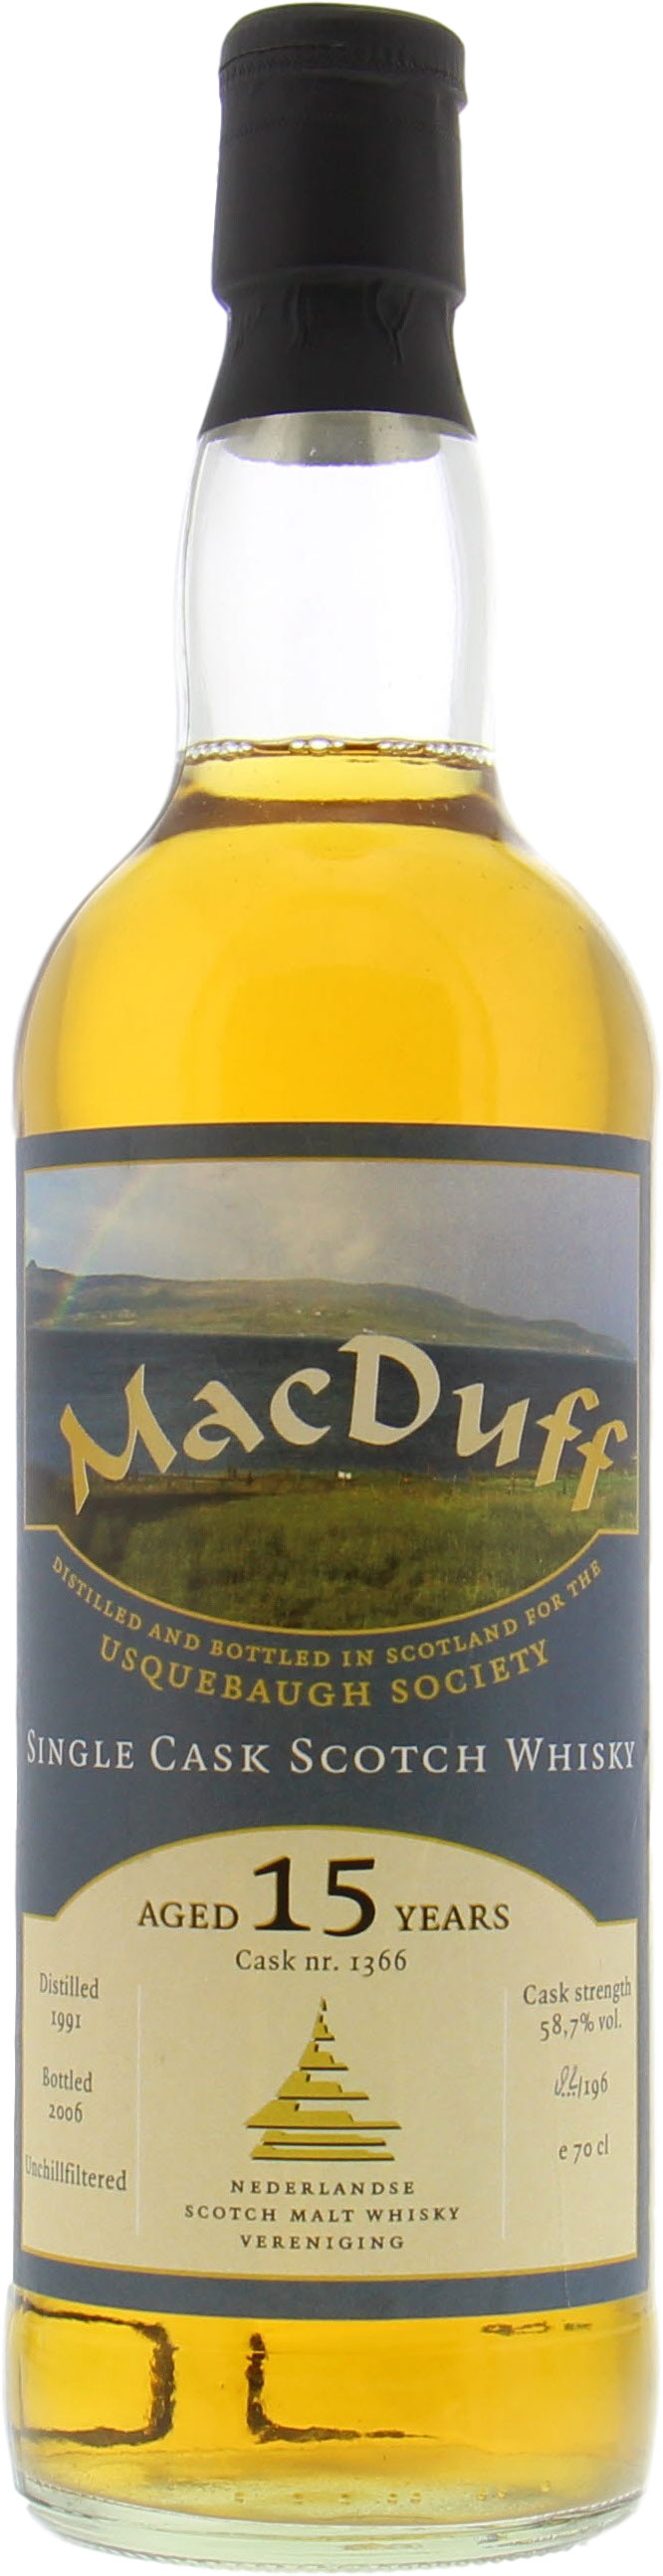 Macduff - 15 Years Old Cask 1366 Usquebaugh Society 58.7% 1991 In Original Container